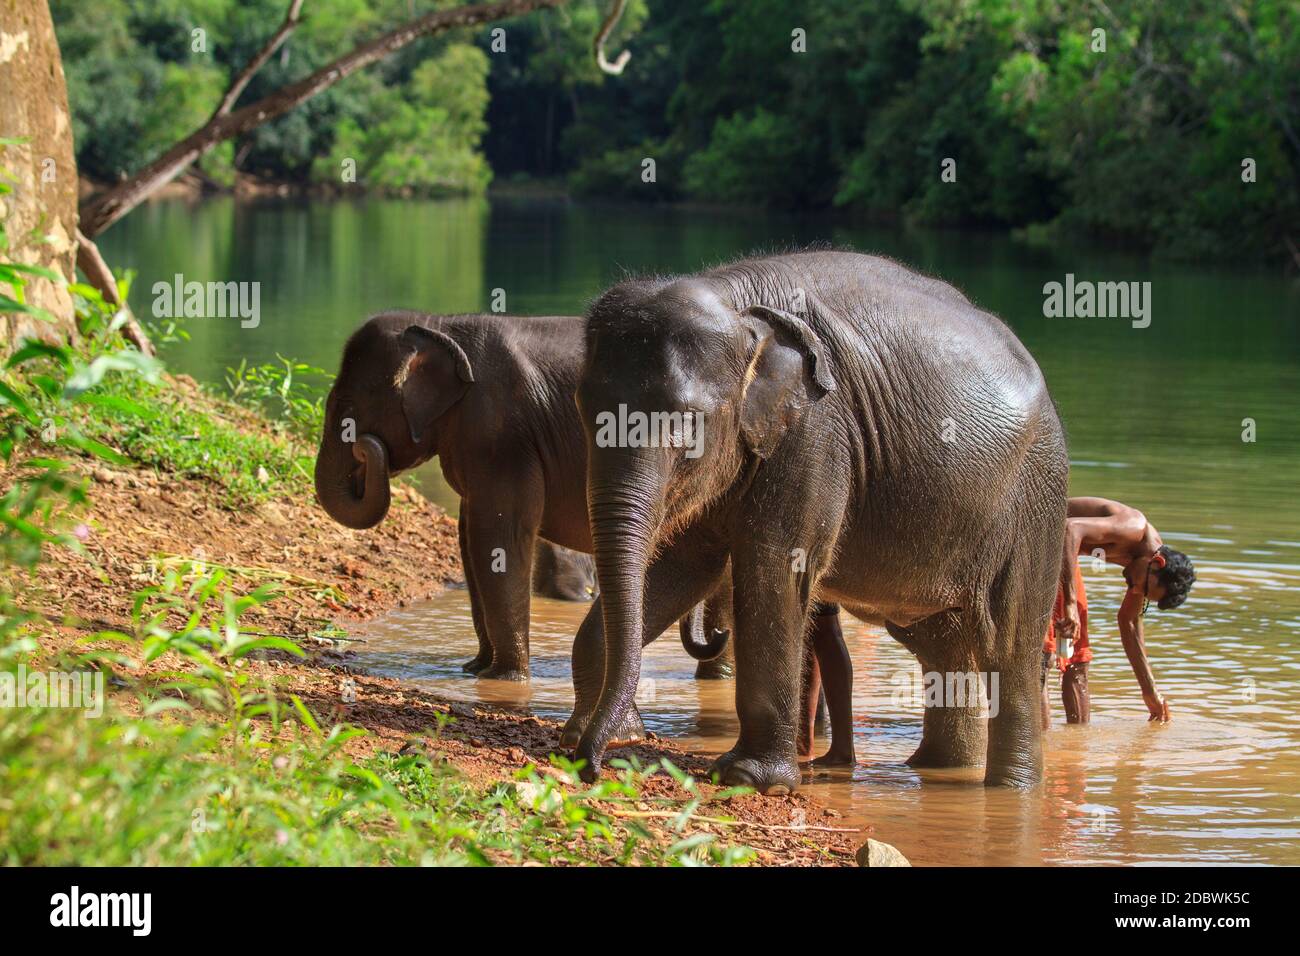 Elefantenrehabilitationszentrum, Kottoor, Kappukad, Trivandrum, Elefantenfütterung, Baden, Safari Stockfoto